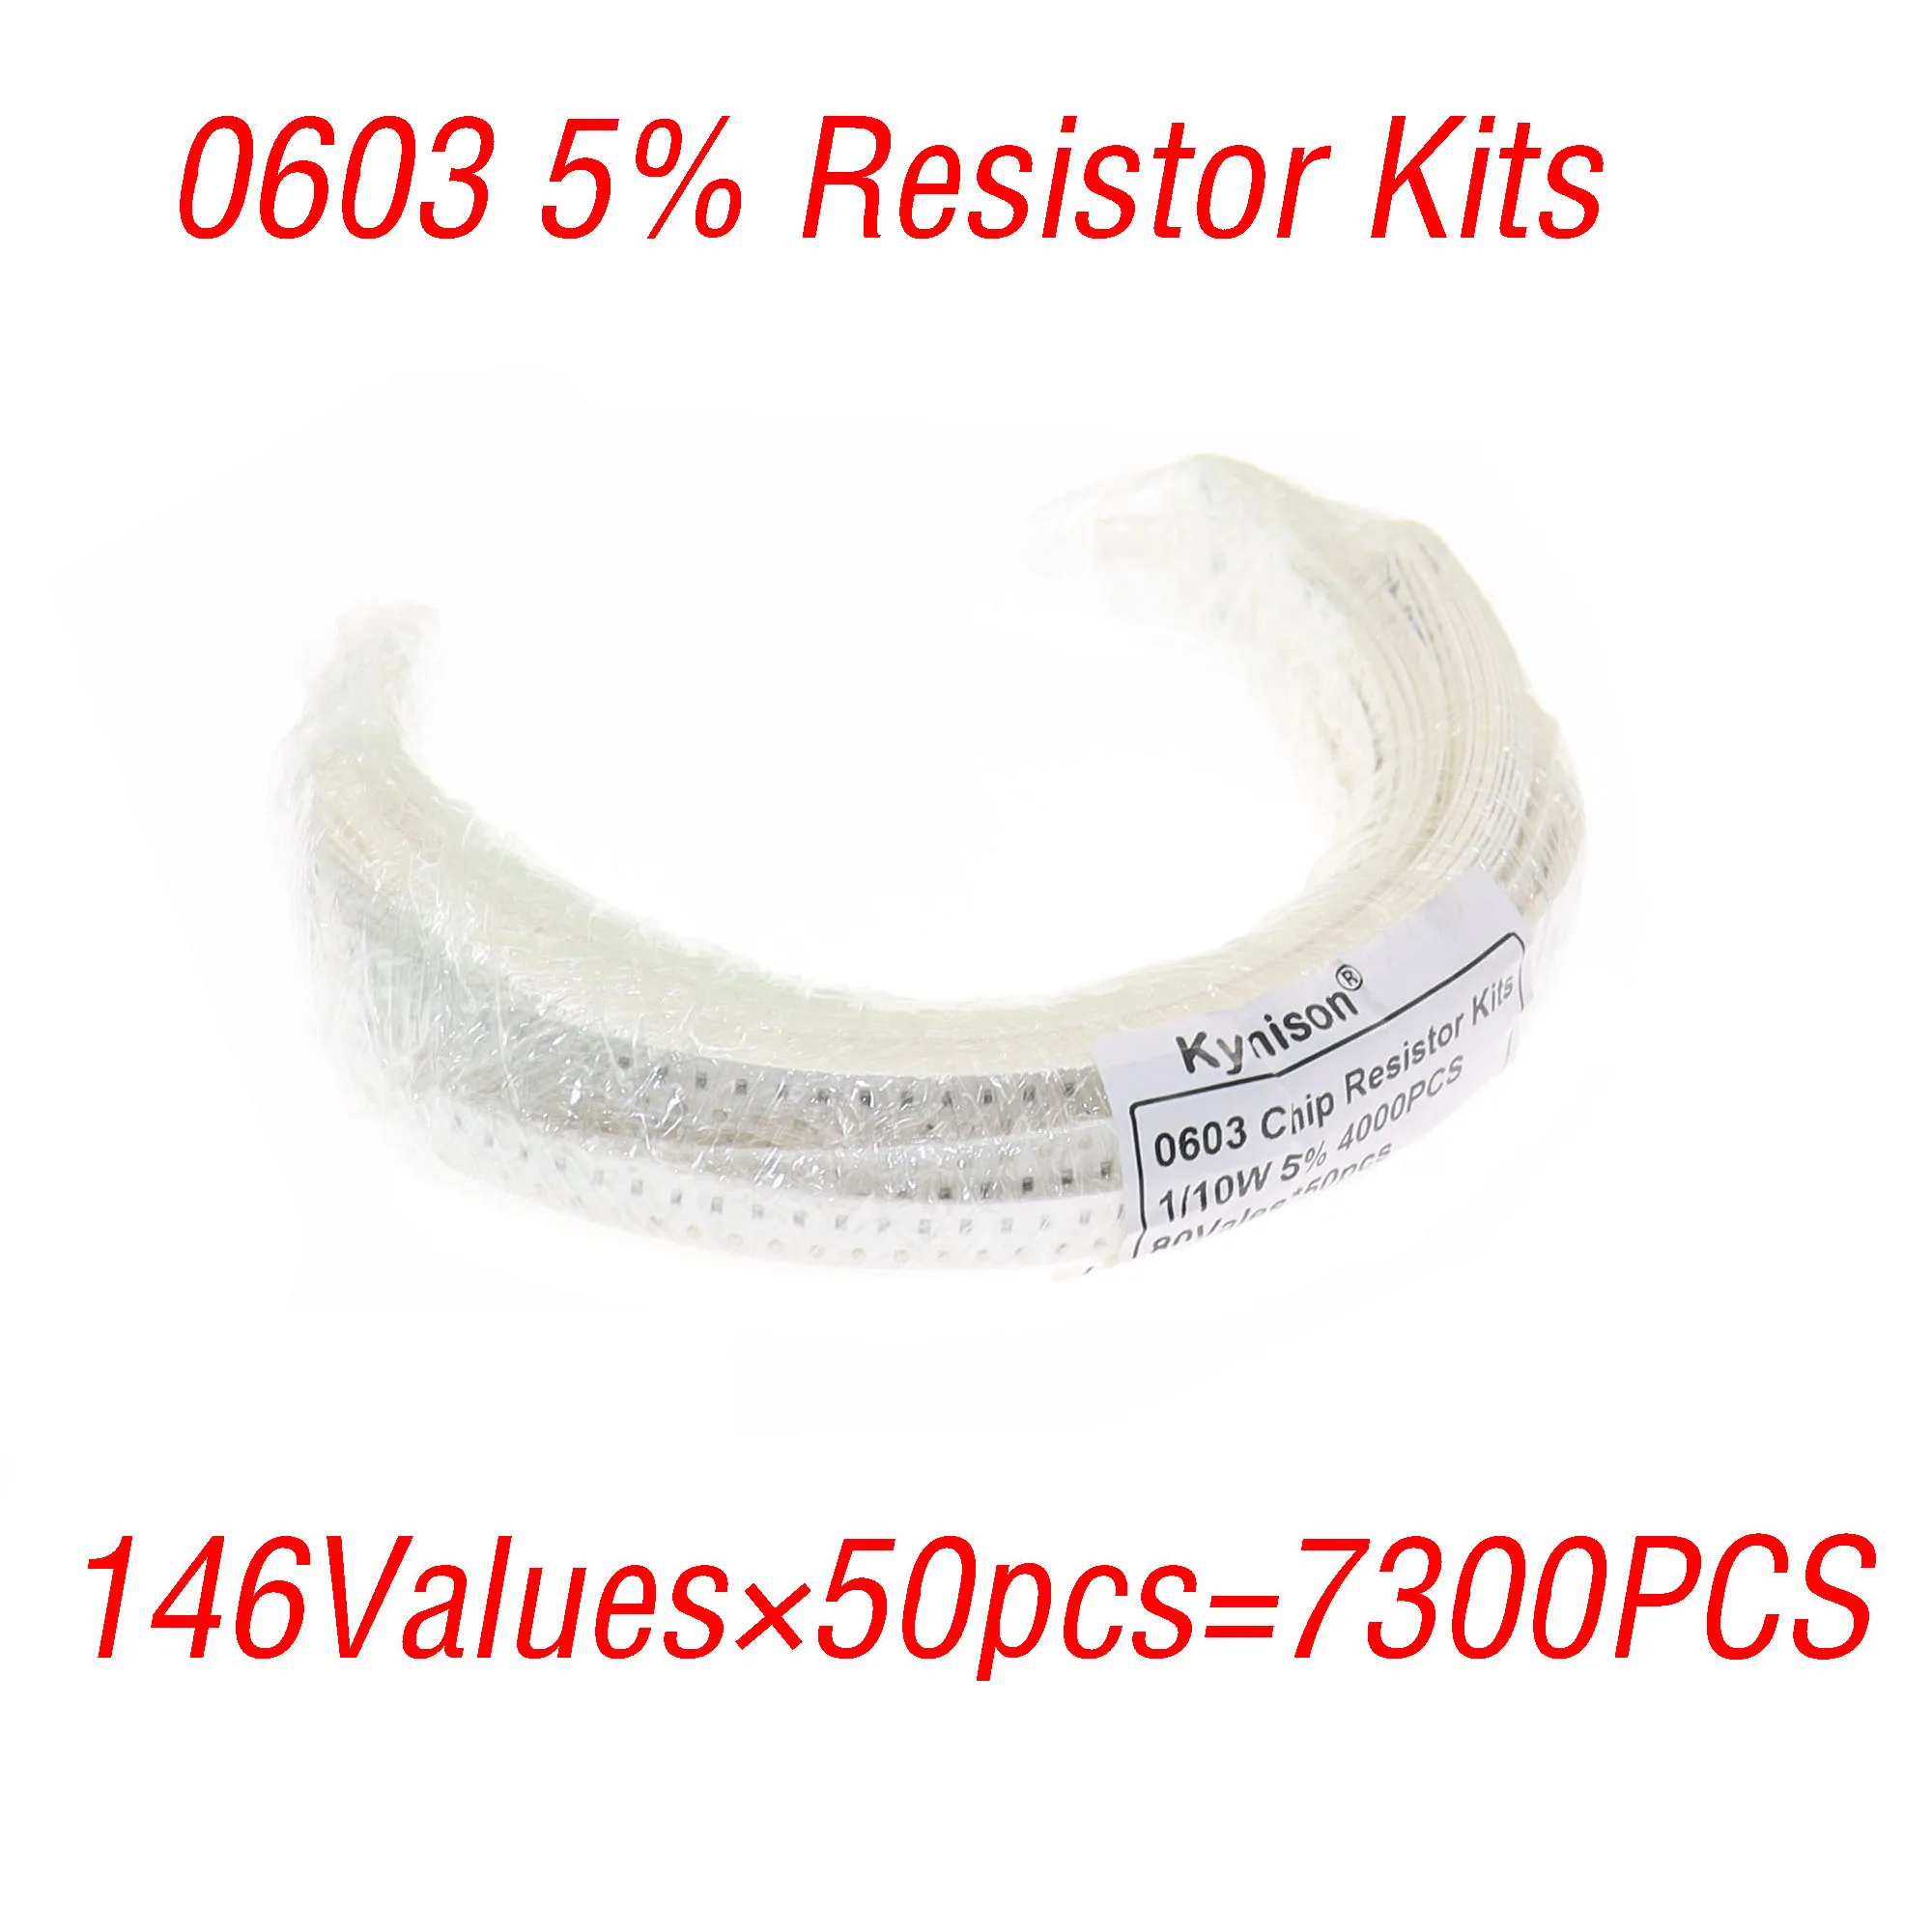 

7300pcs 0603 Chip Resistor Kits 0R~1M 0603 5% 146 Values Each 50pcs Sample Kits SMD Resistor Value Pack For DIY Assorted Kits